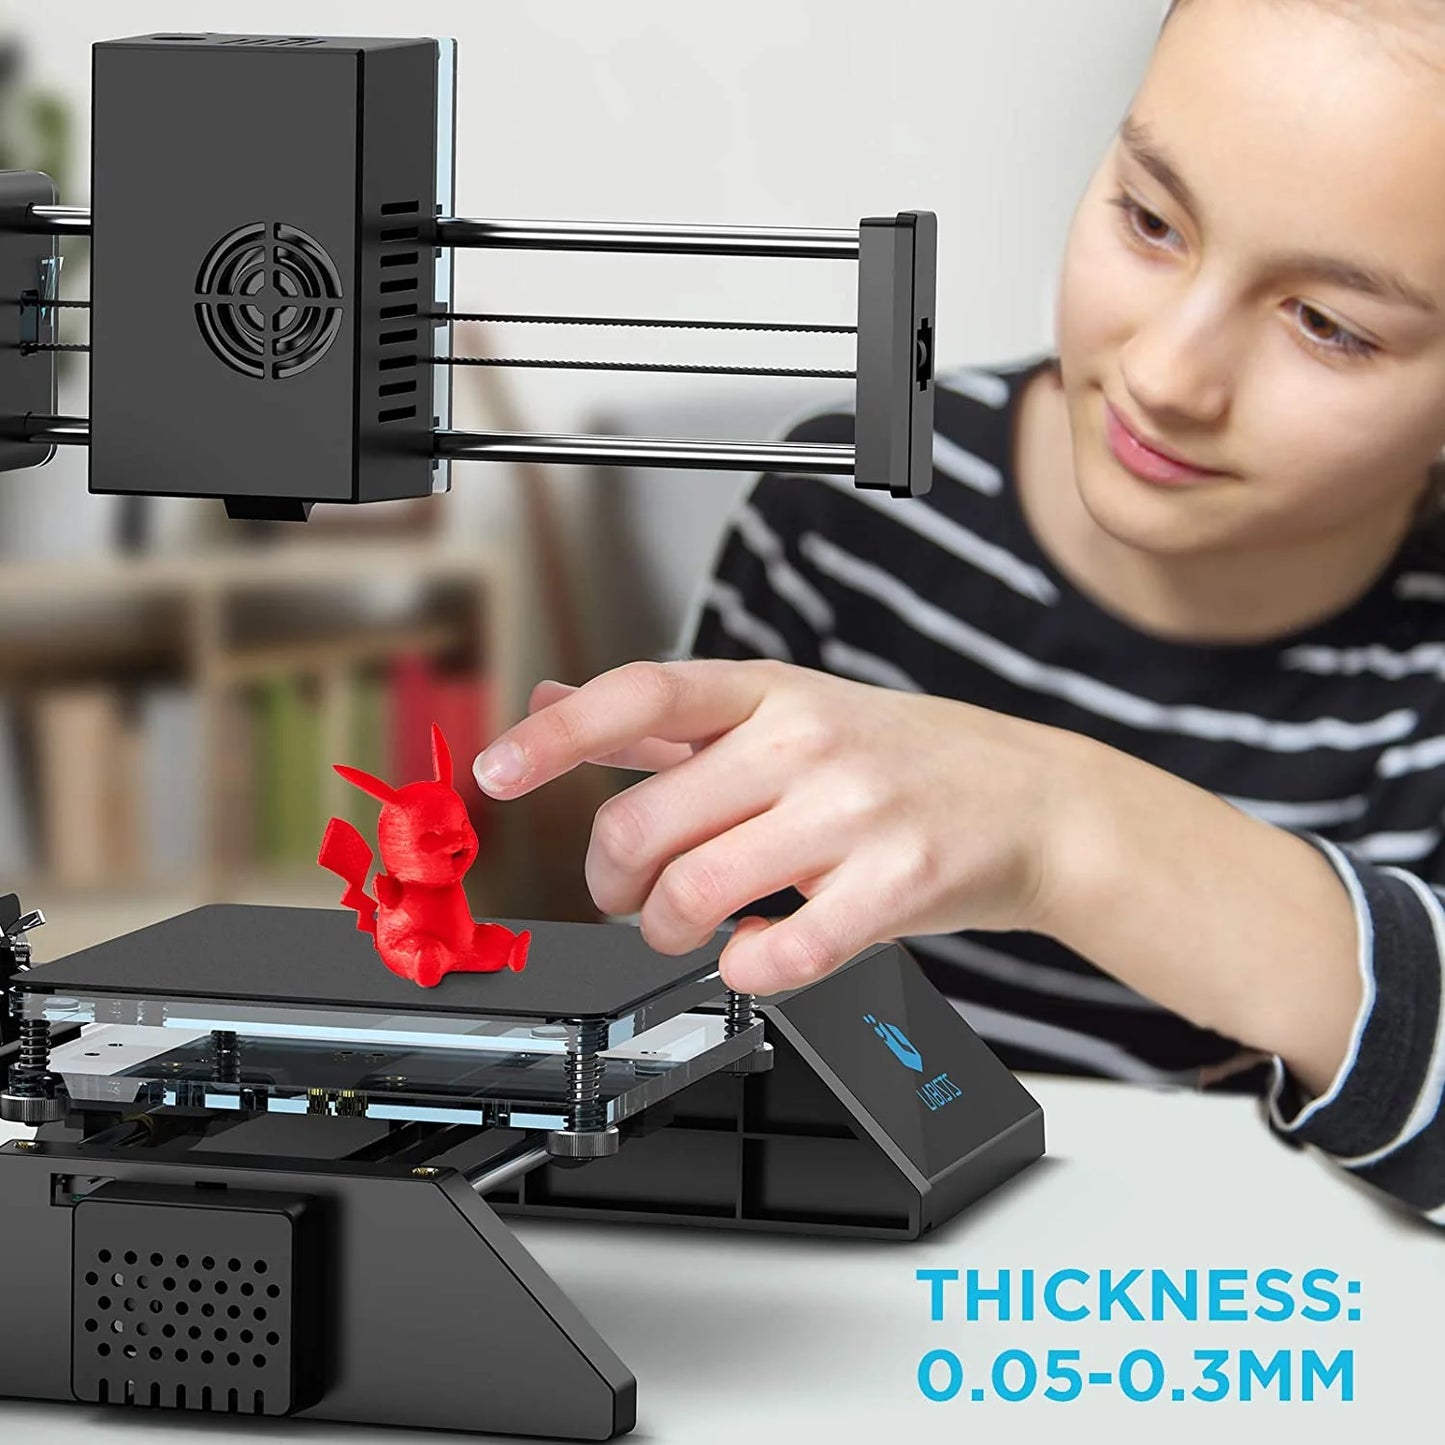 LABISTS SX1 Mini Desktop 3D Printer Kit